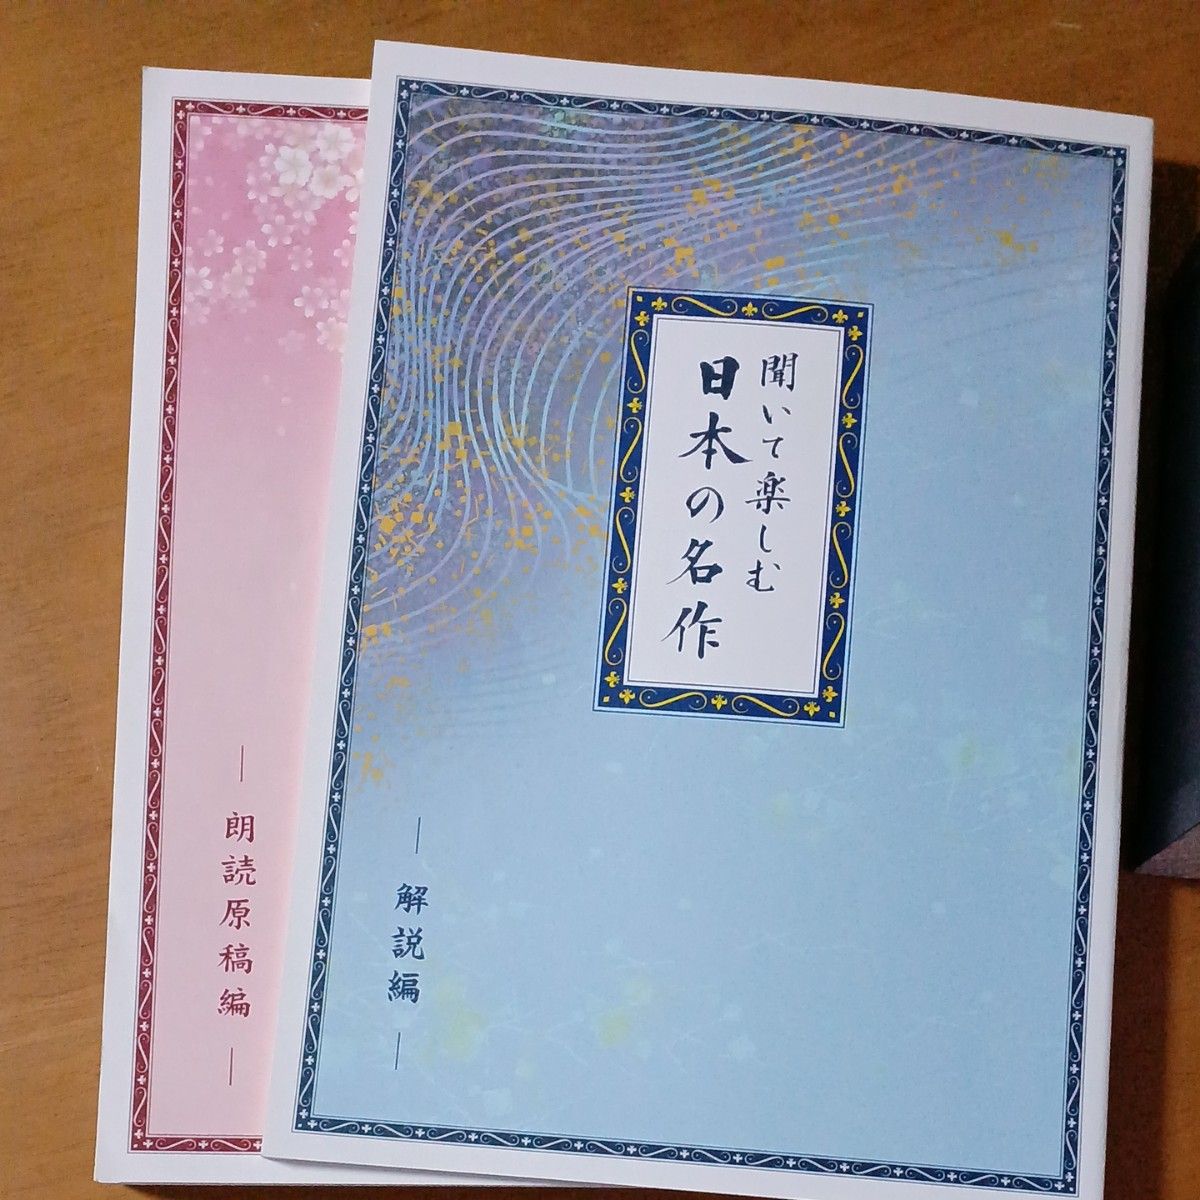 CD 聞いて楽しむ日本の名作 全16枚セット ユーキャン 解説、朗読原稿付き